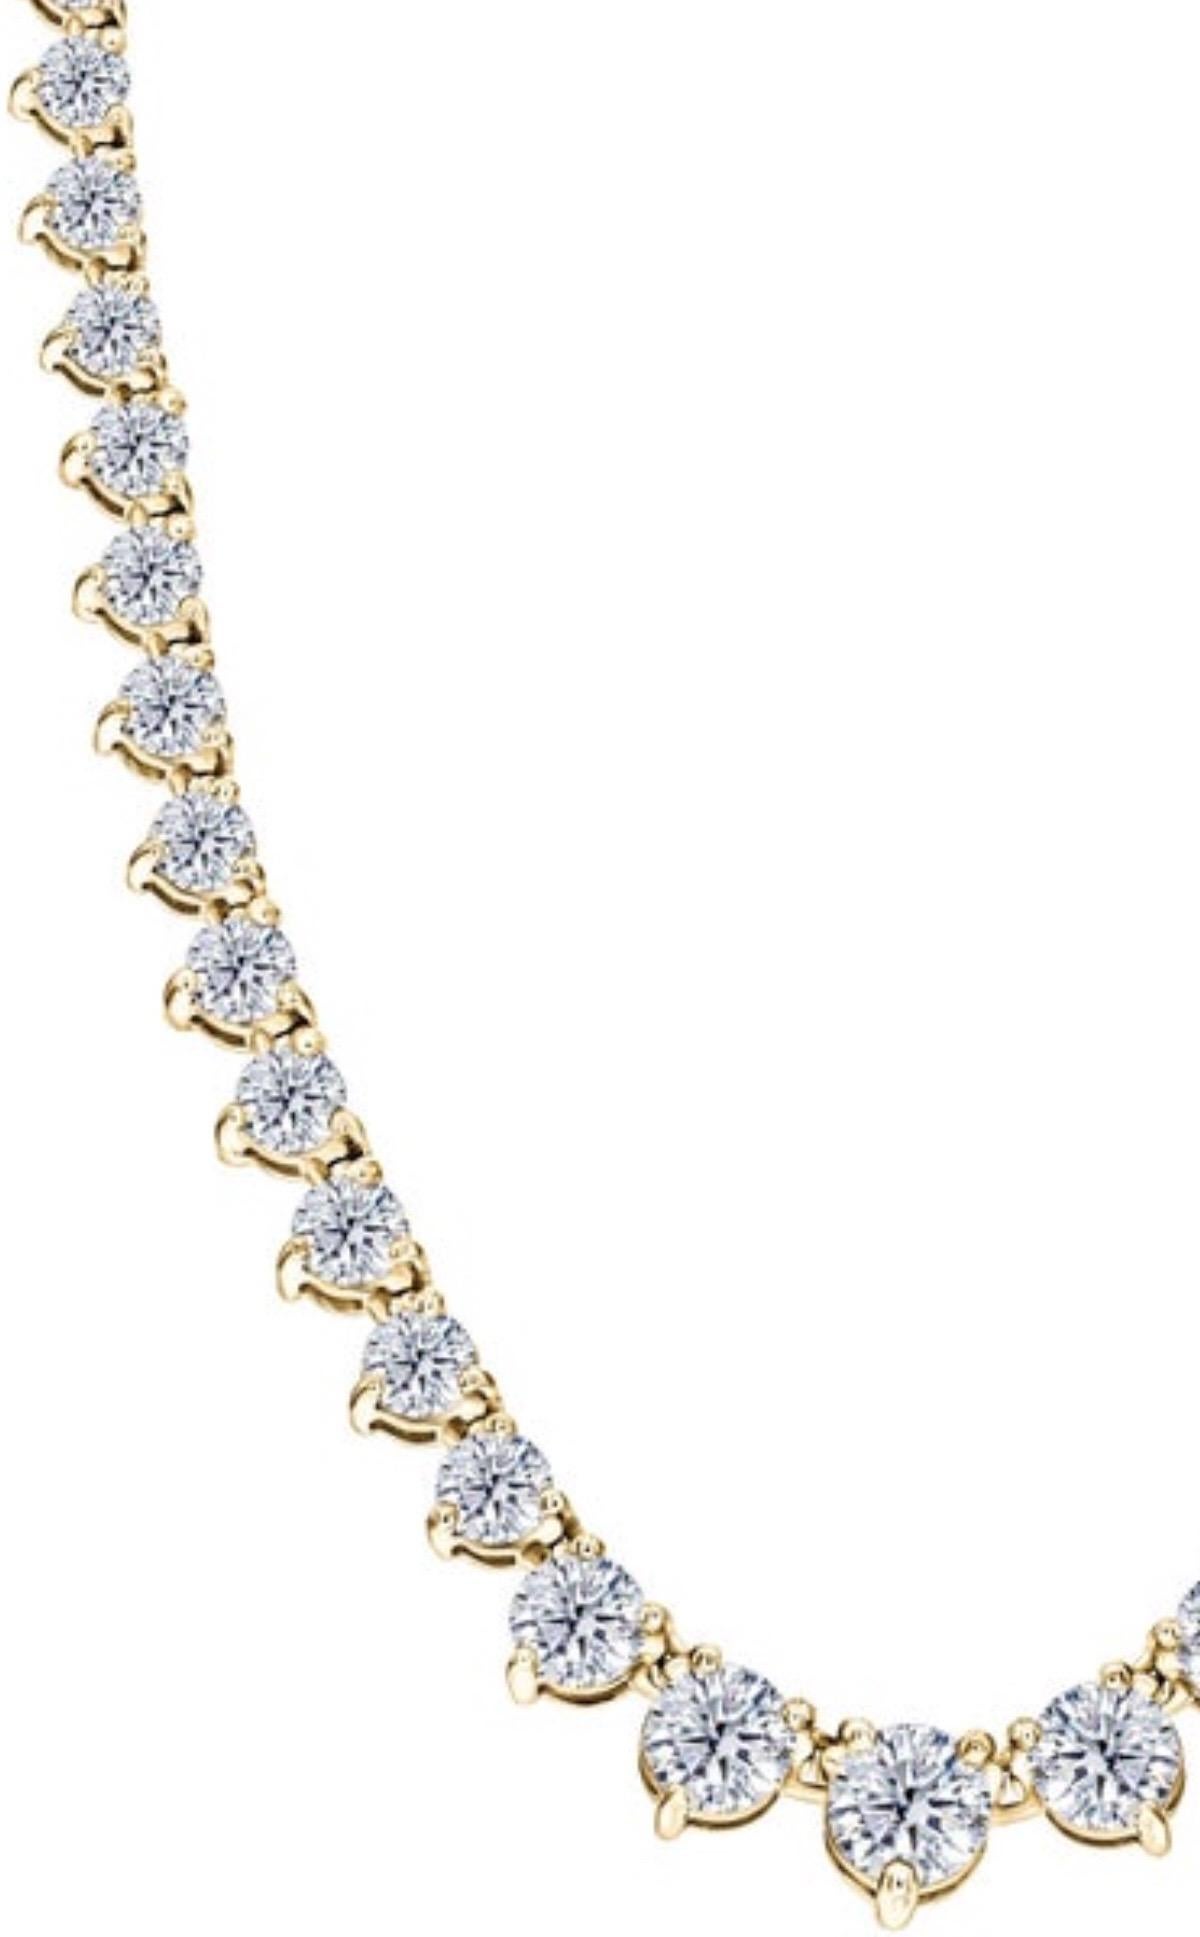 10 carat necklace